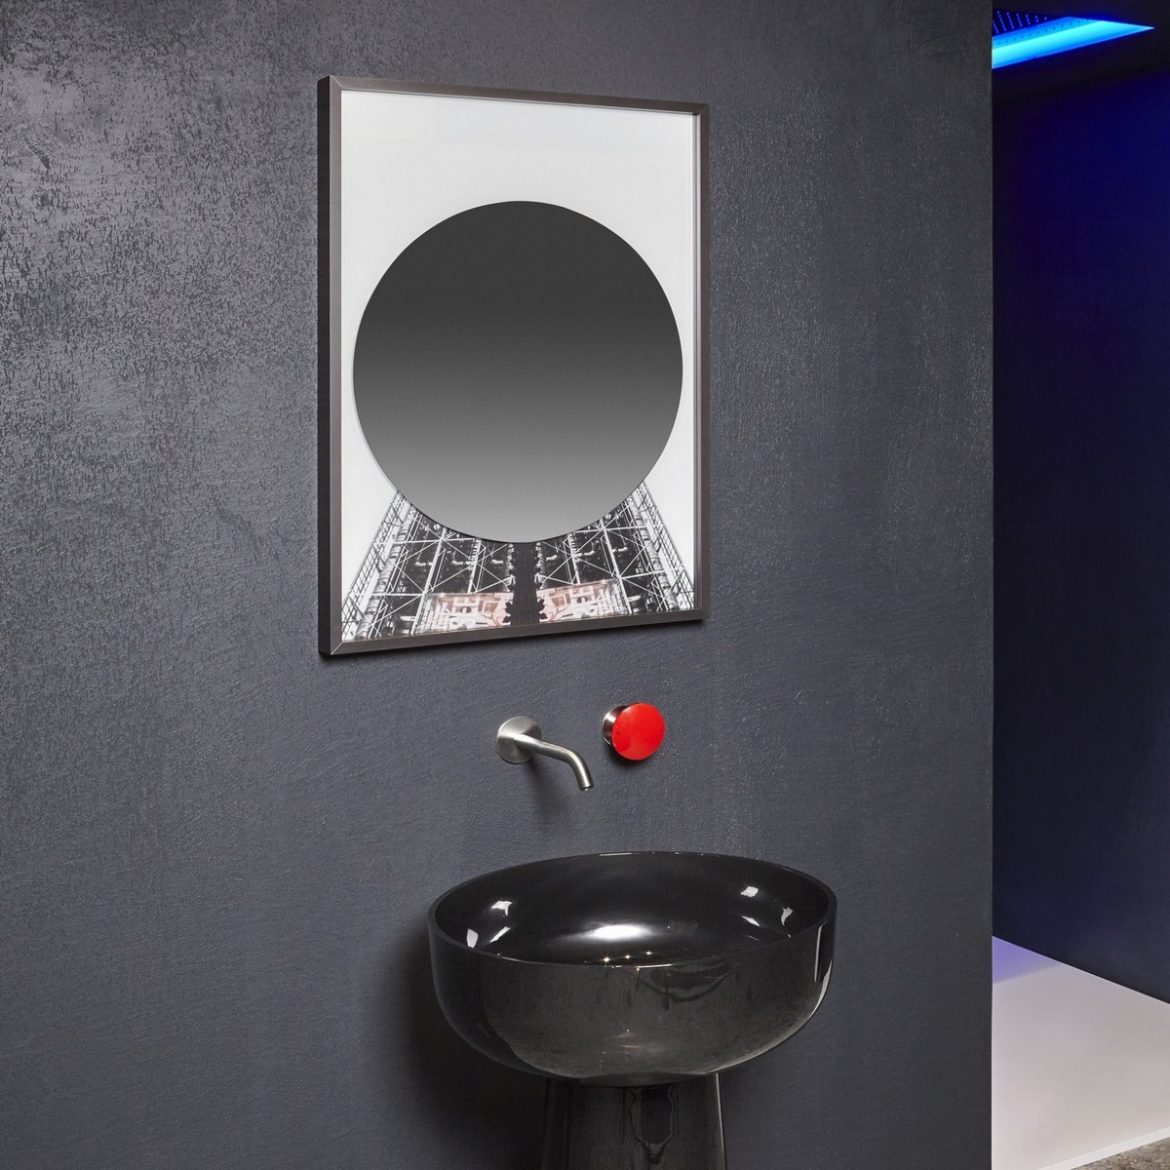 Inspiring Bathroom Vanities From Maison et Objet!